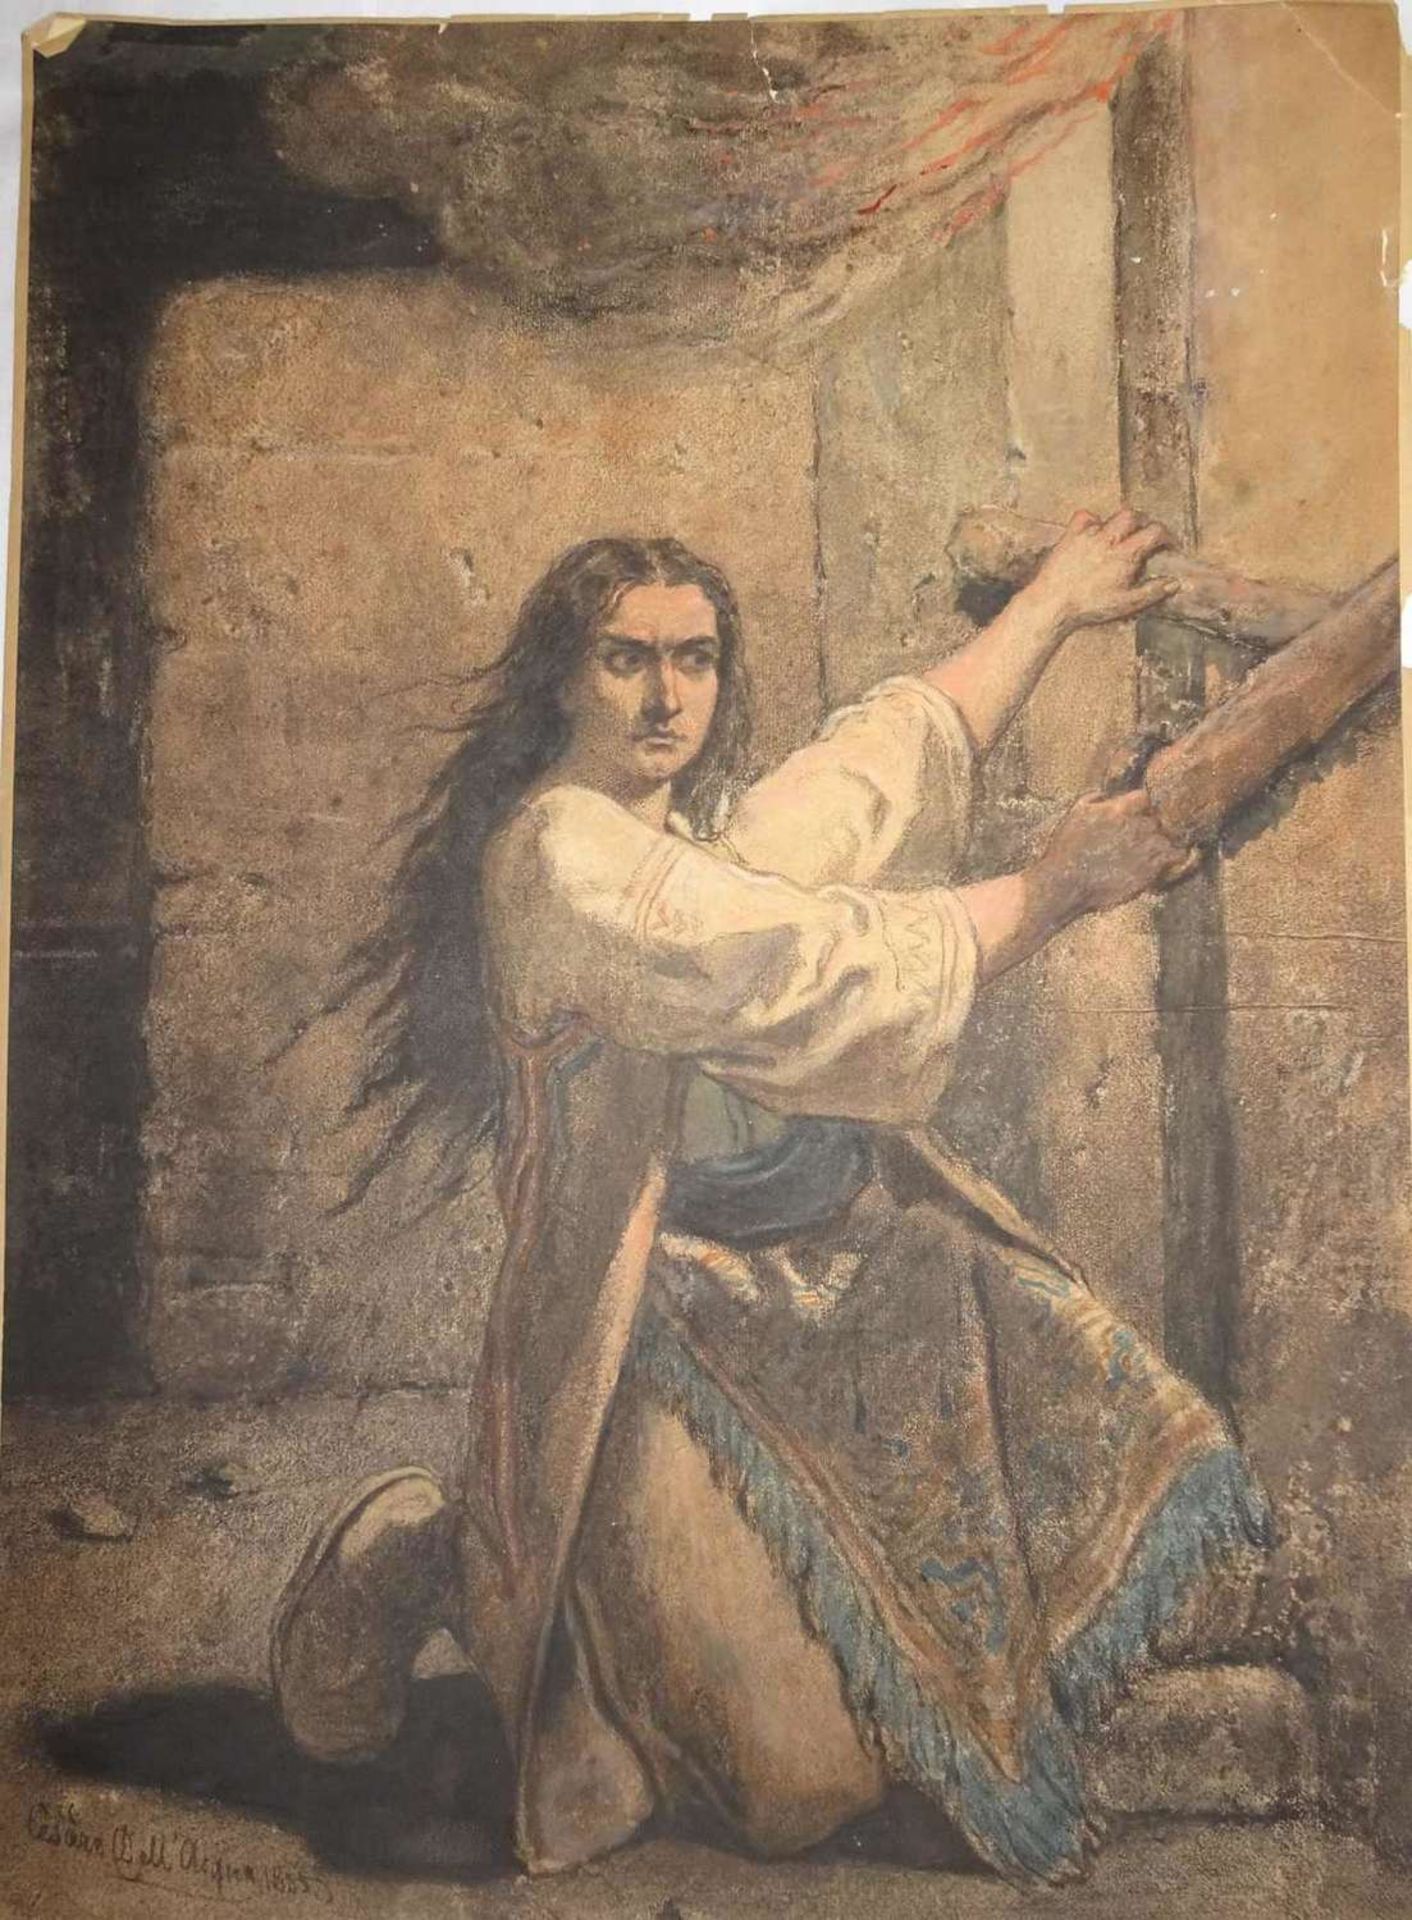 Cesare Dell Acqua (1821-1905), Kohle/Aquarell. "Griechin", links unten signiert 1855. Maße: Höhe